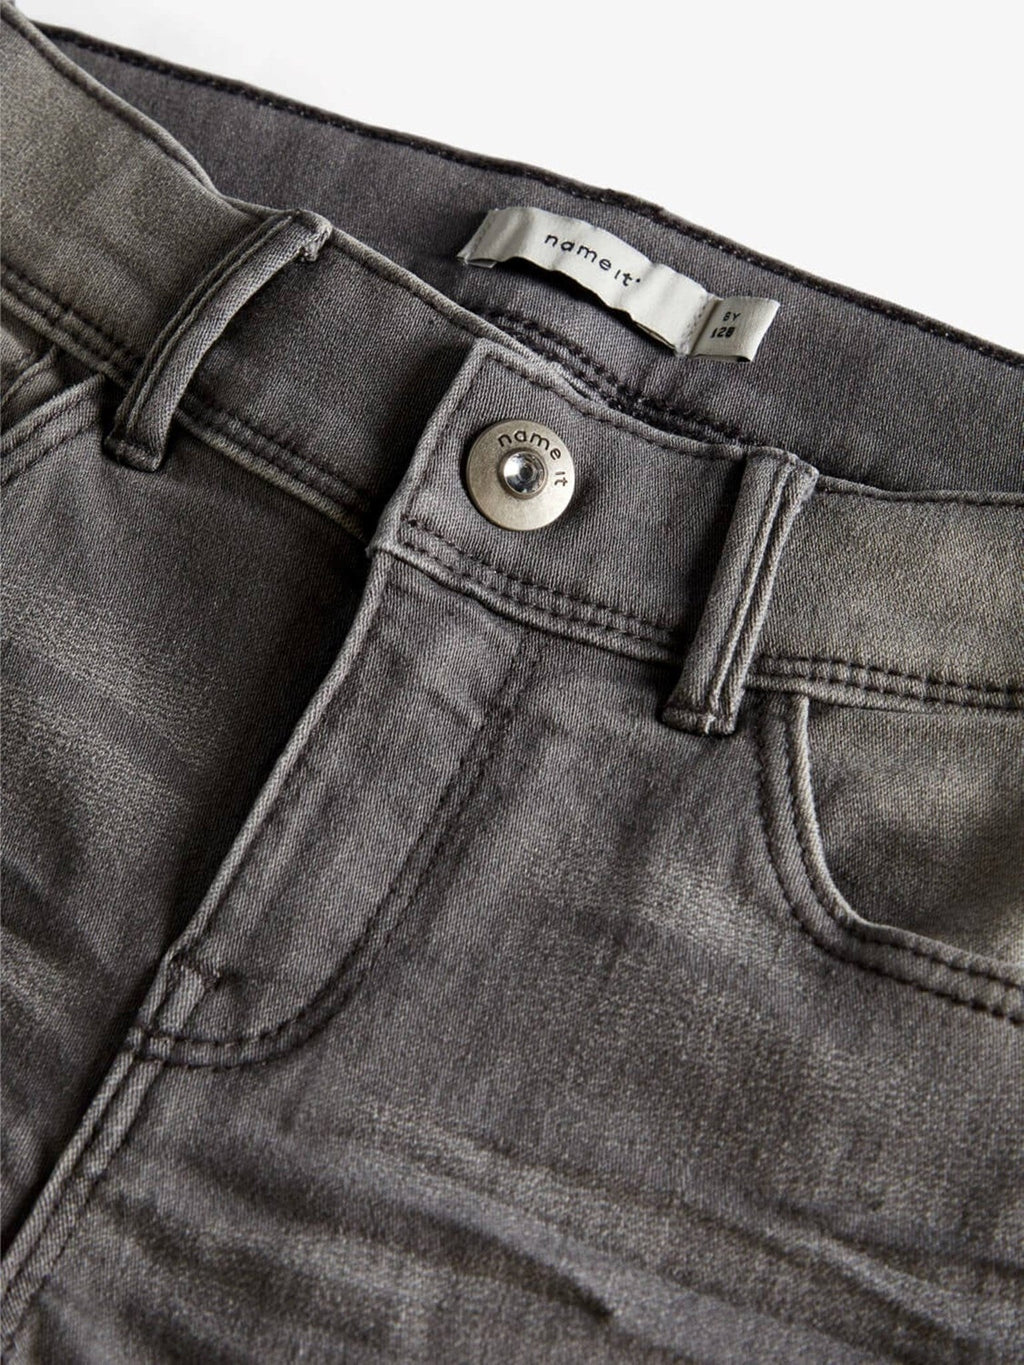 Skinny fit Jeans in organic cotton - Gray denim